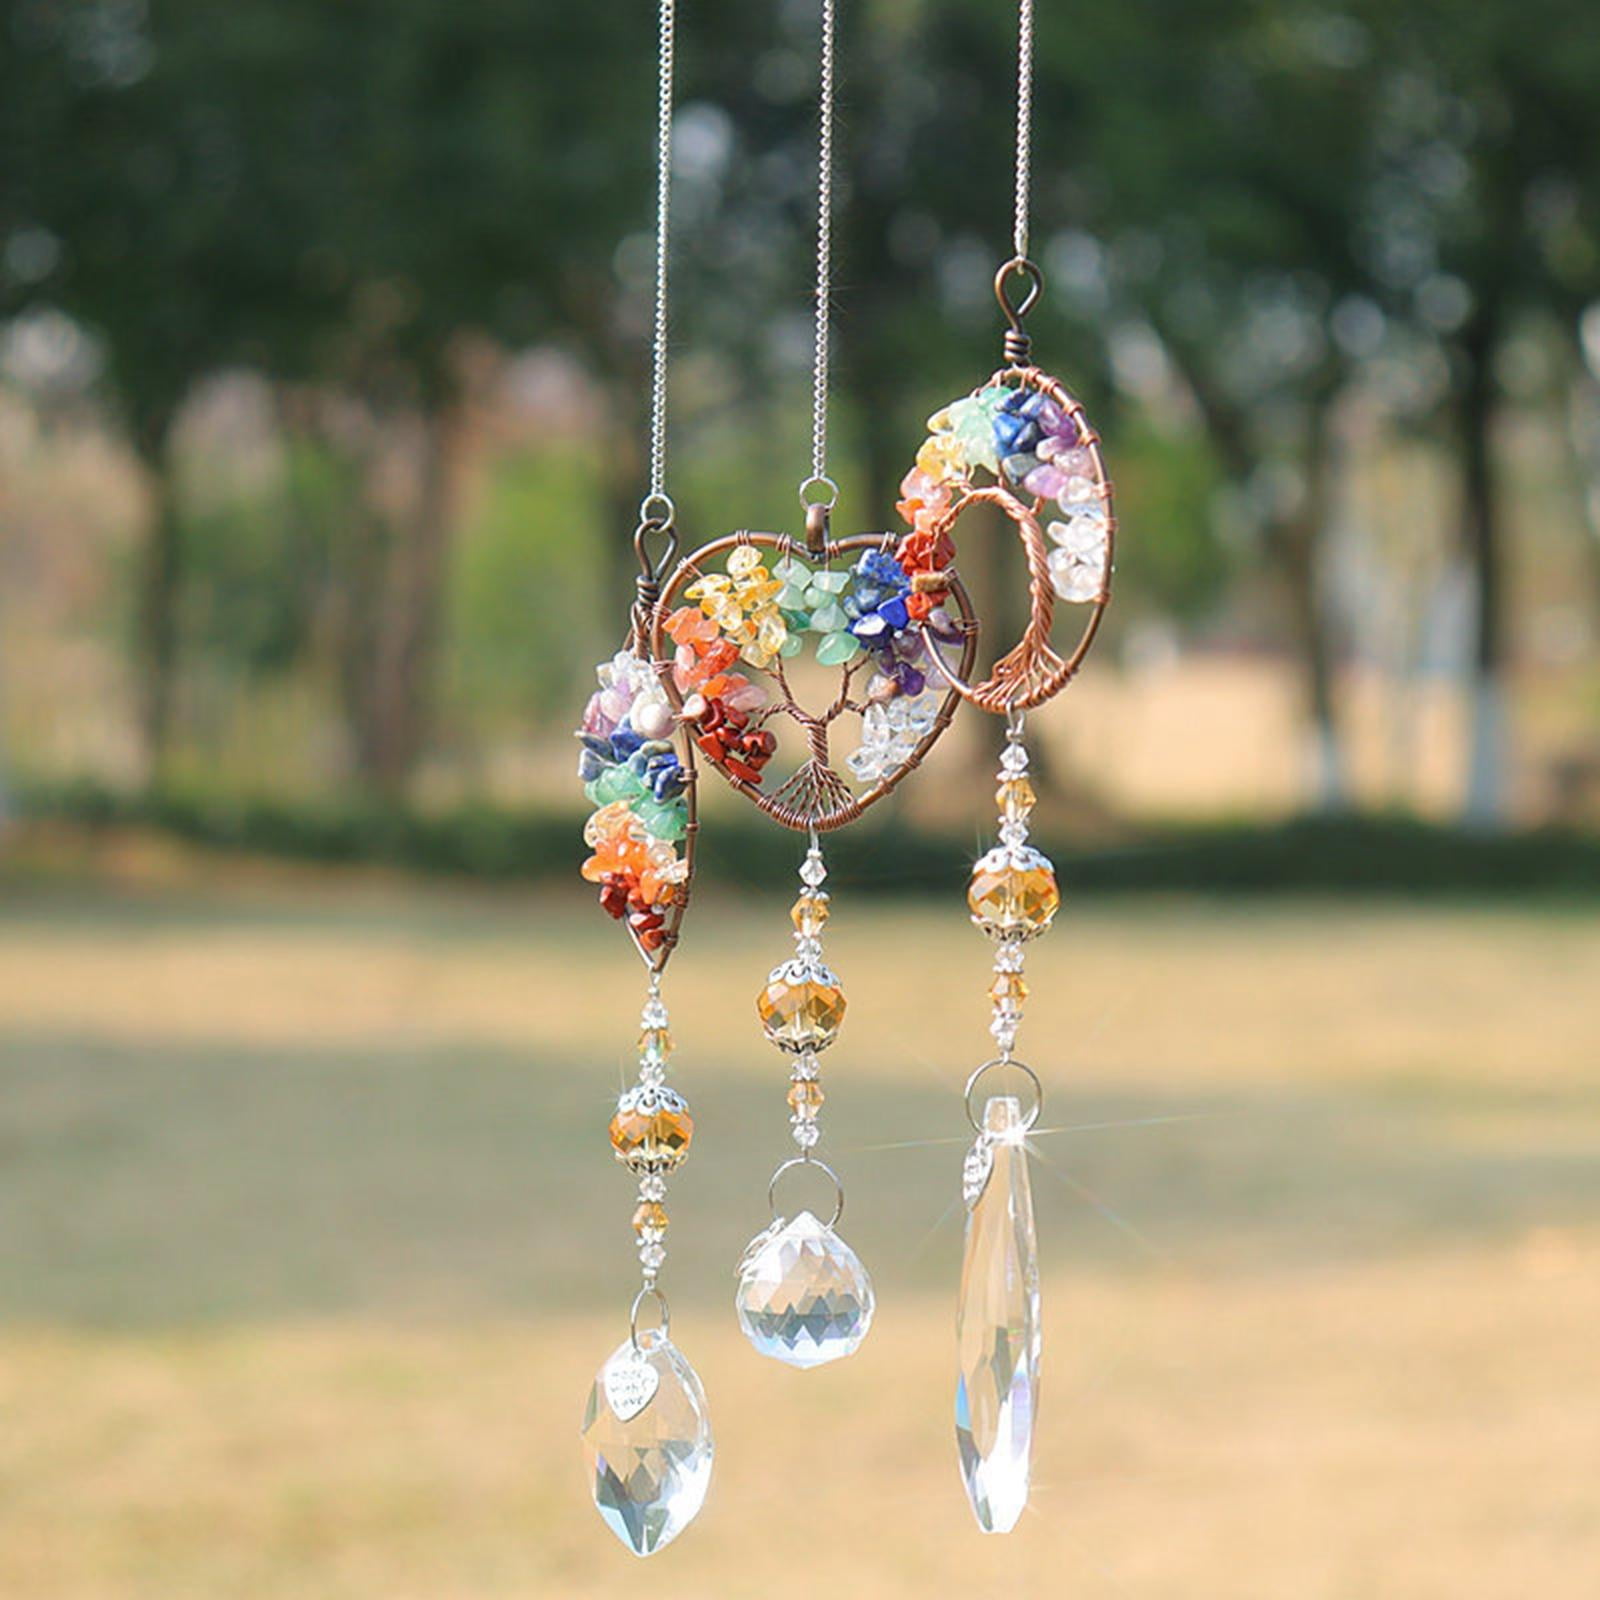 LONGWIN Set 6 Crystal Prisms Ornament Handmade Pendant Wedding Decor Craft Gifts 